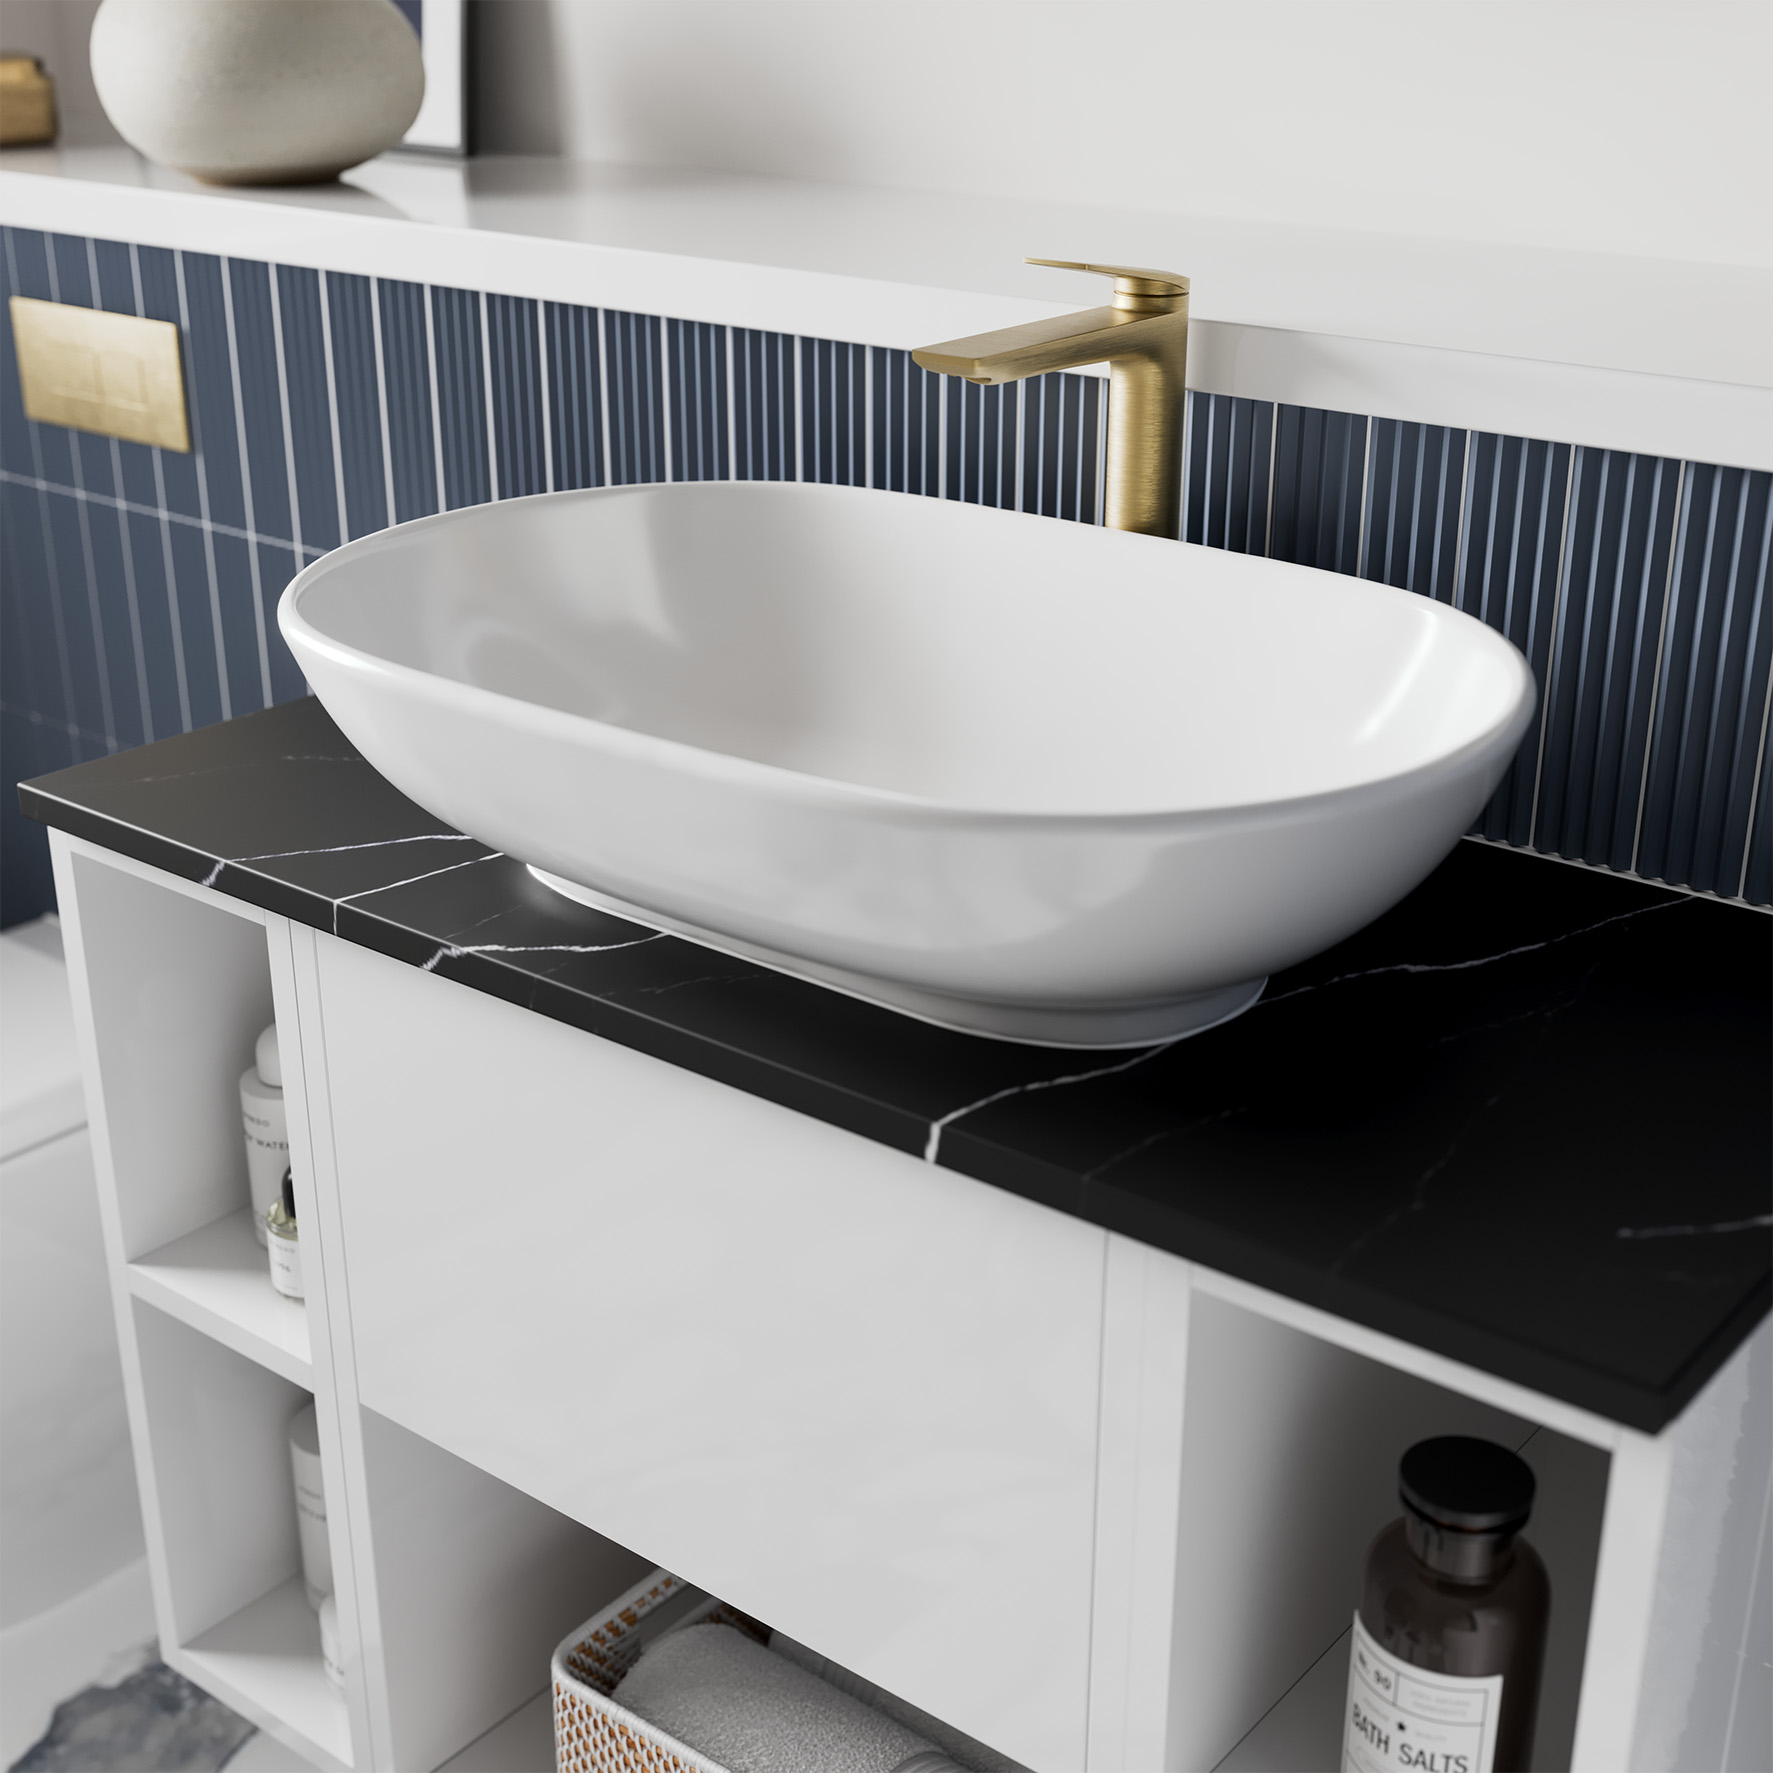 Make a statement with a modern countertop basin design.